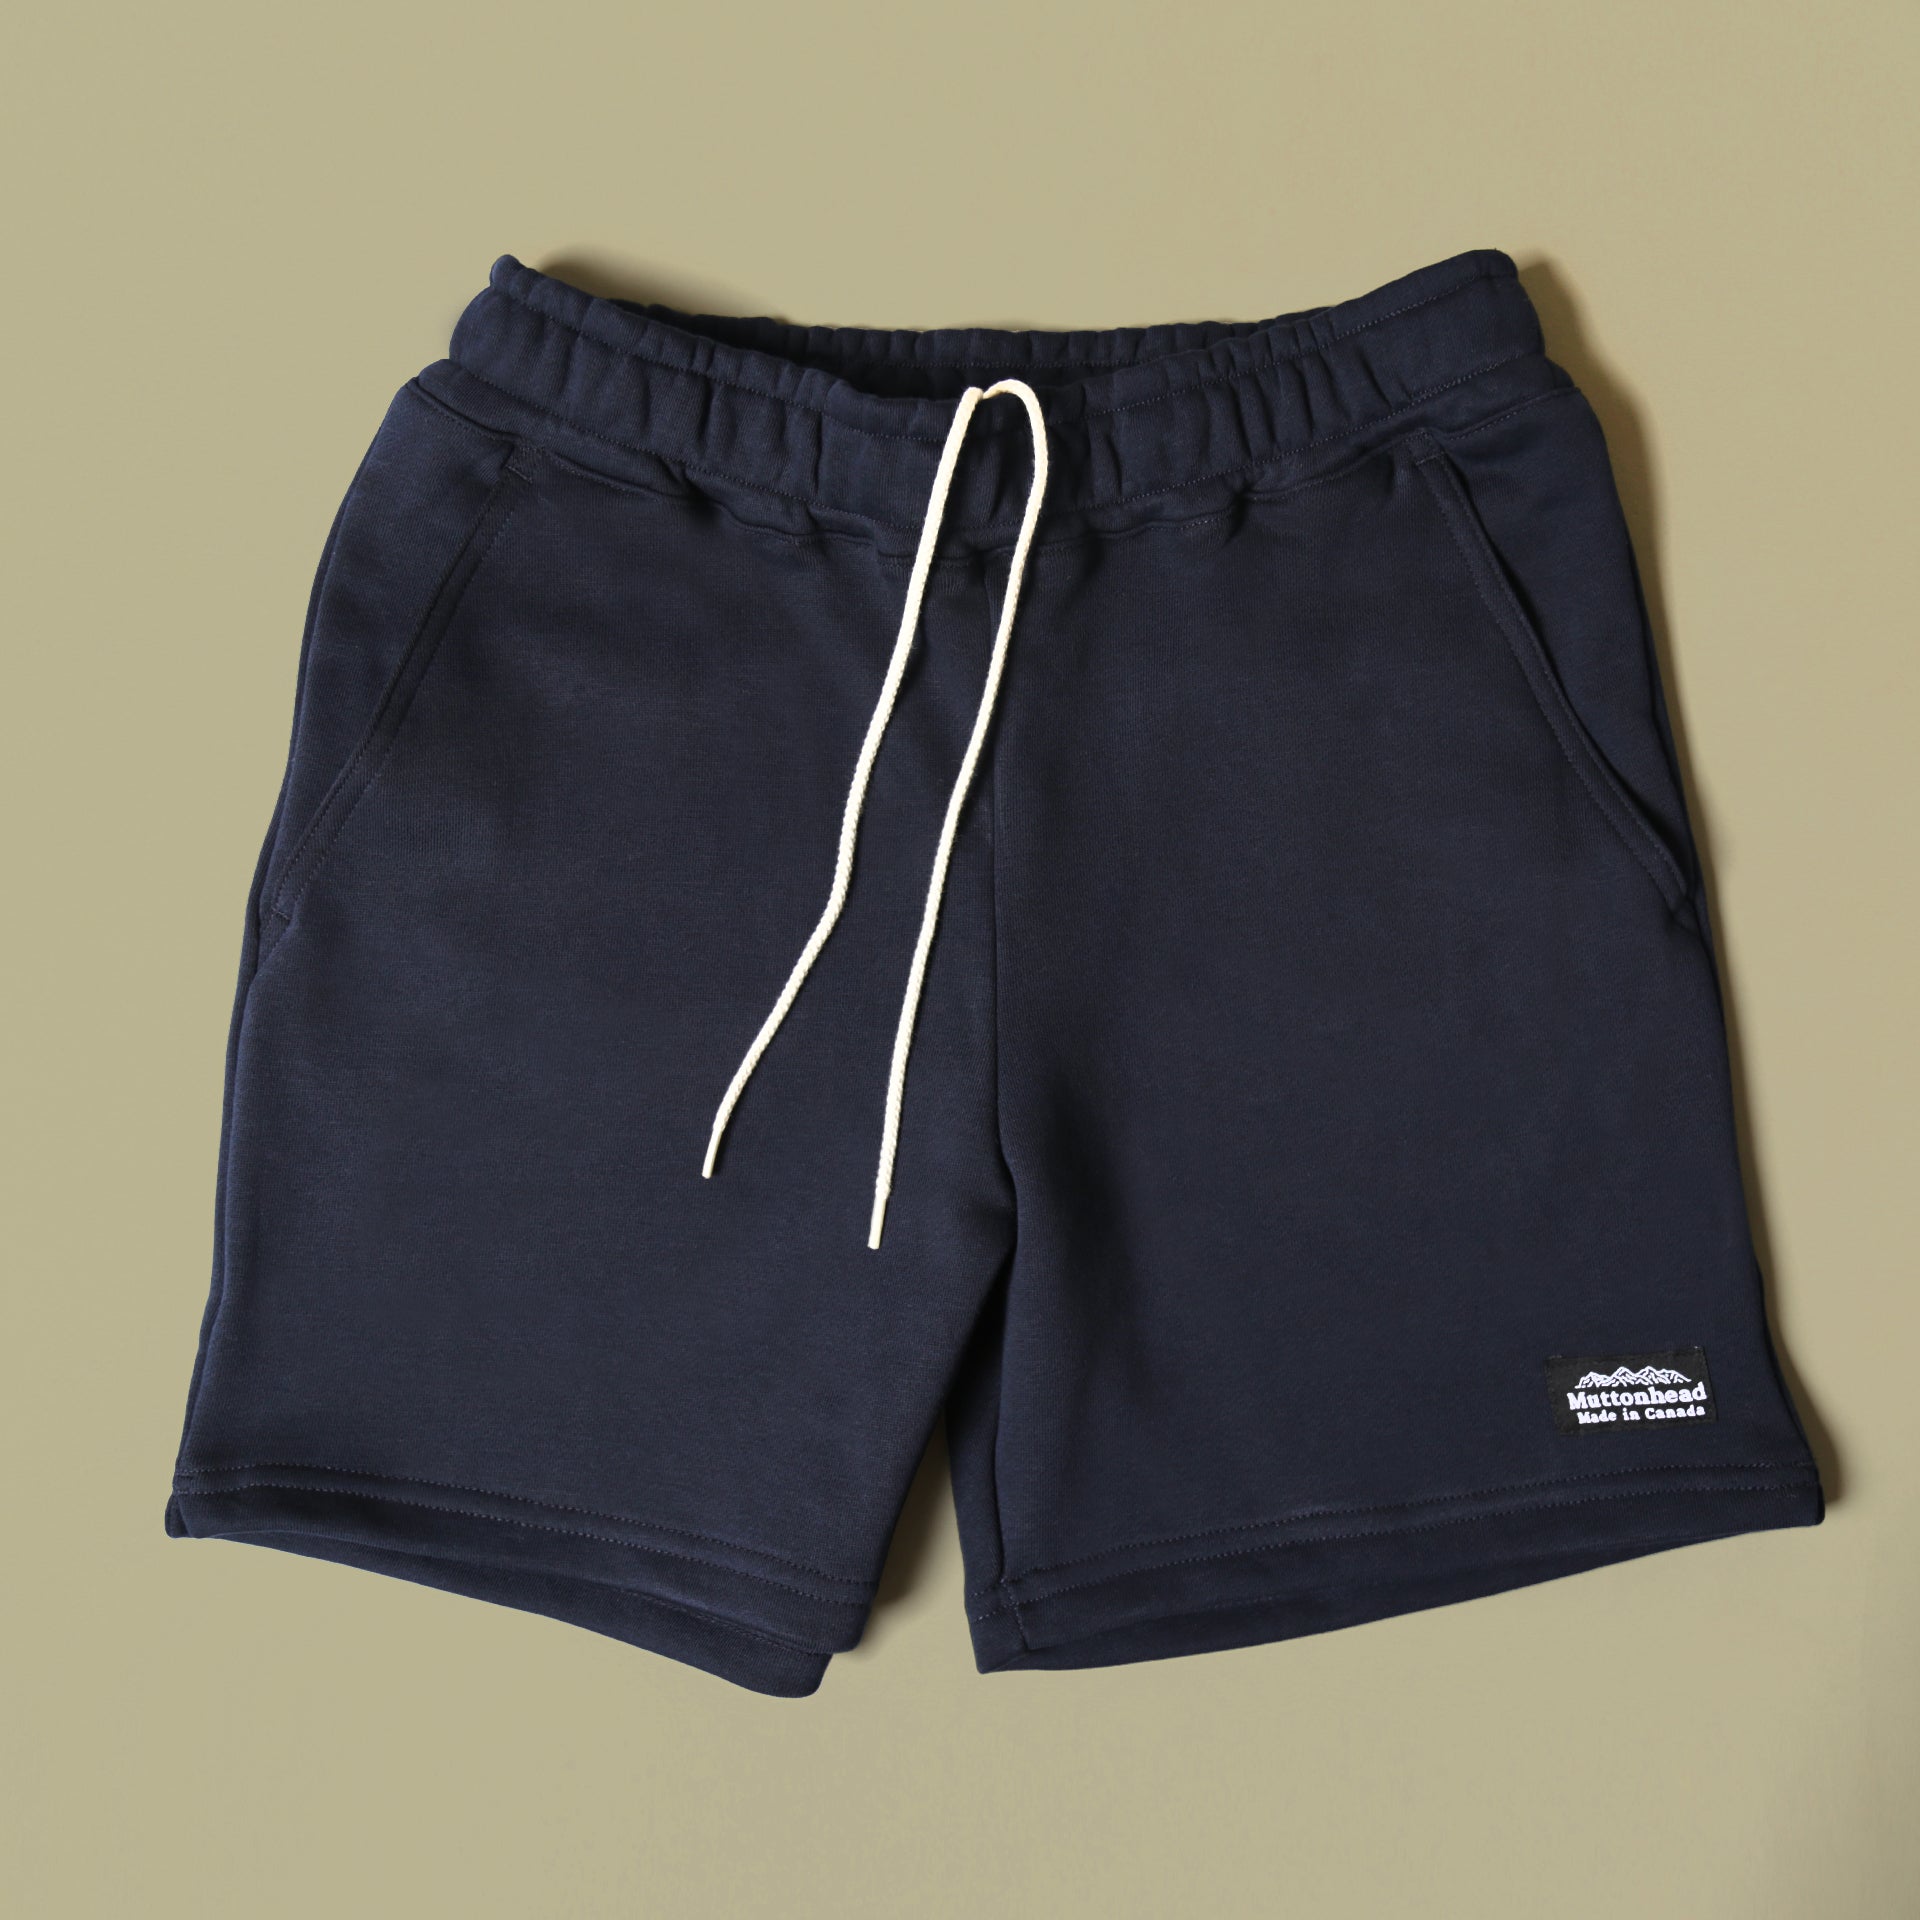 Roamer Shorts - Navy Sweat Short